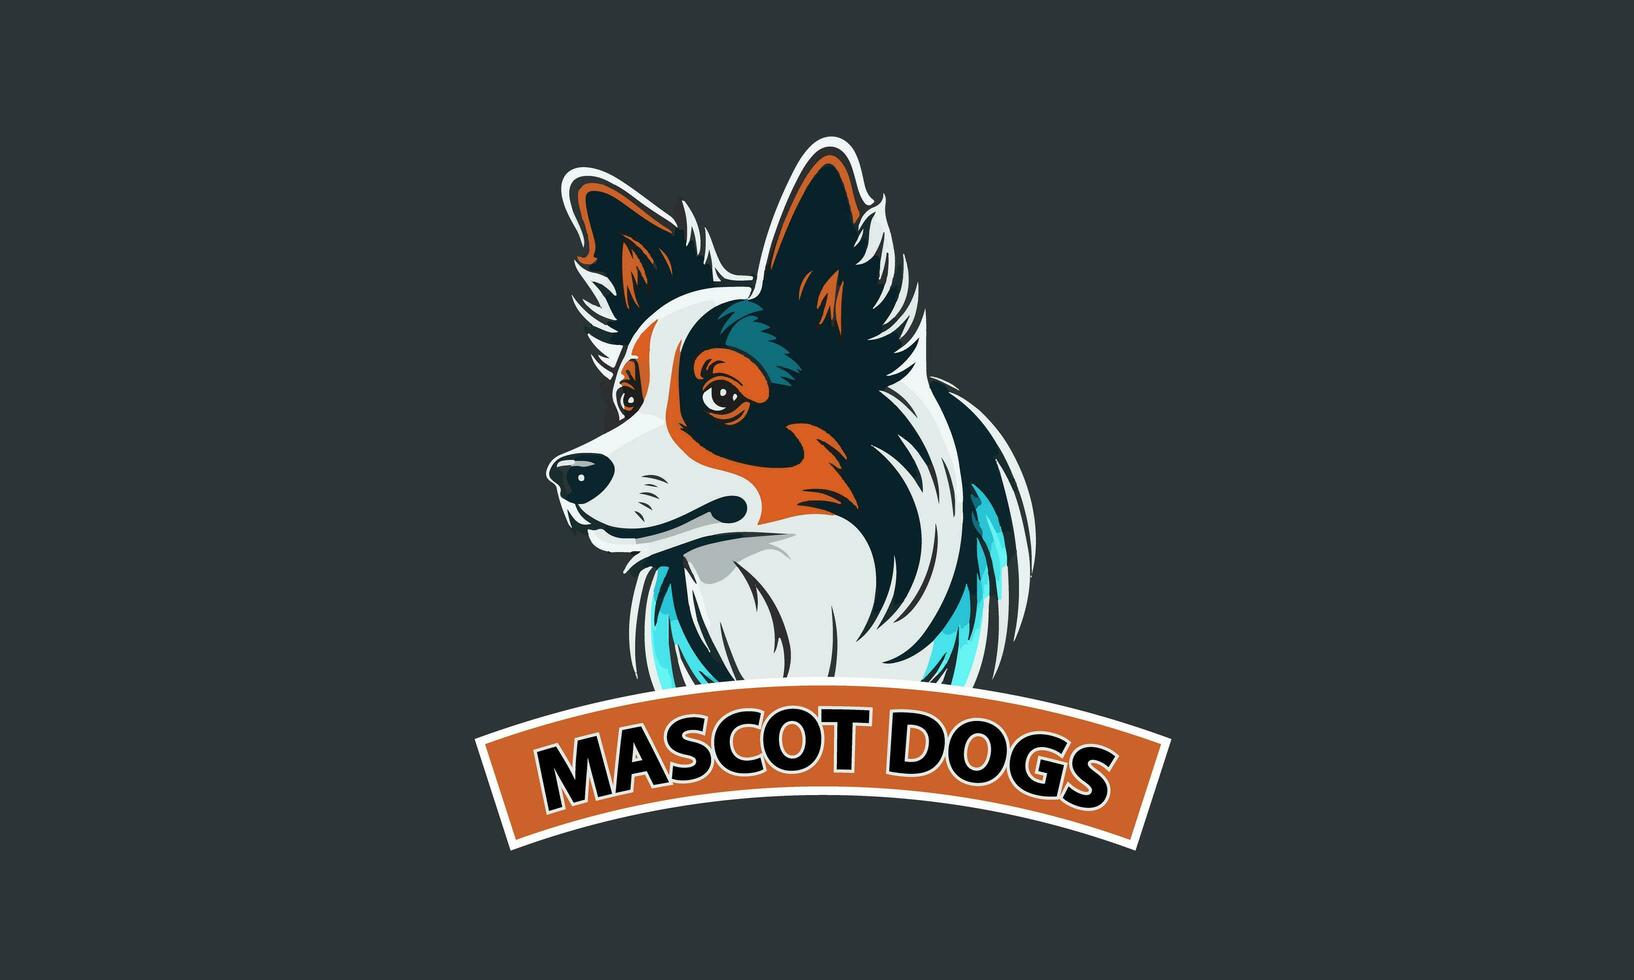 Mascot dog head sticker vector illustration photo